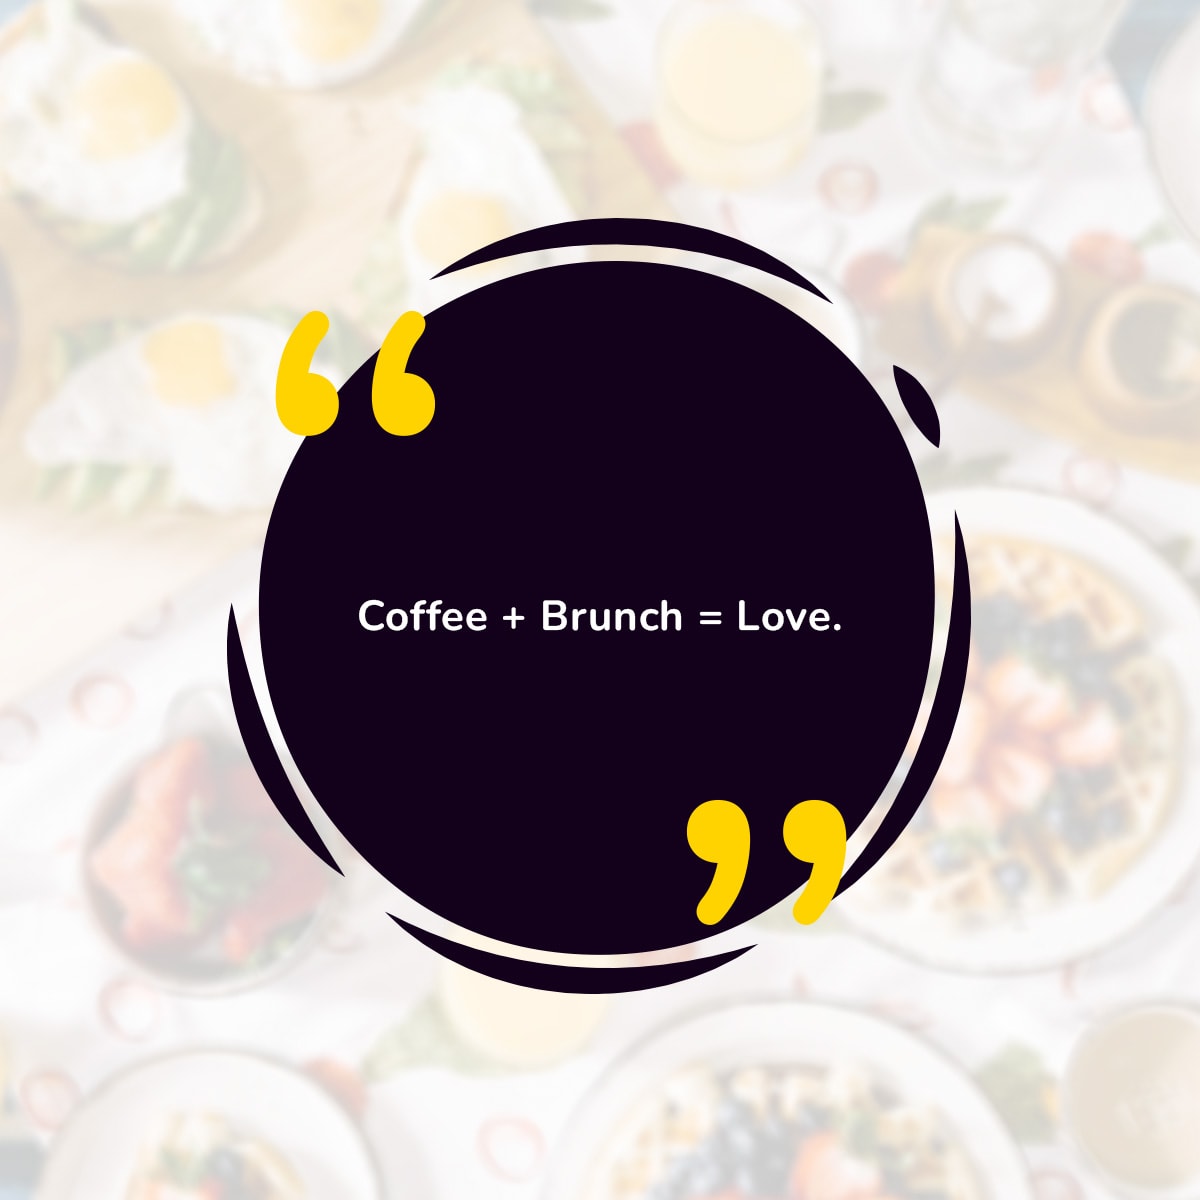 Coffee + Brunch = Love.